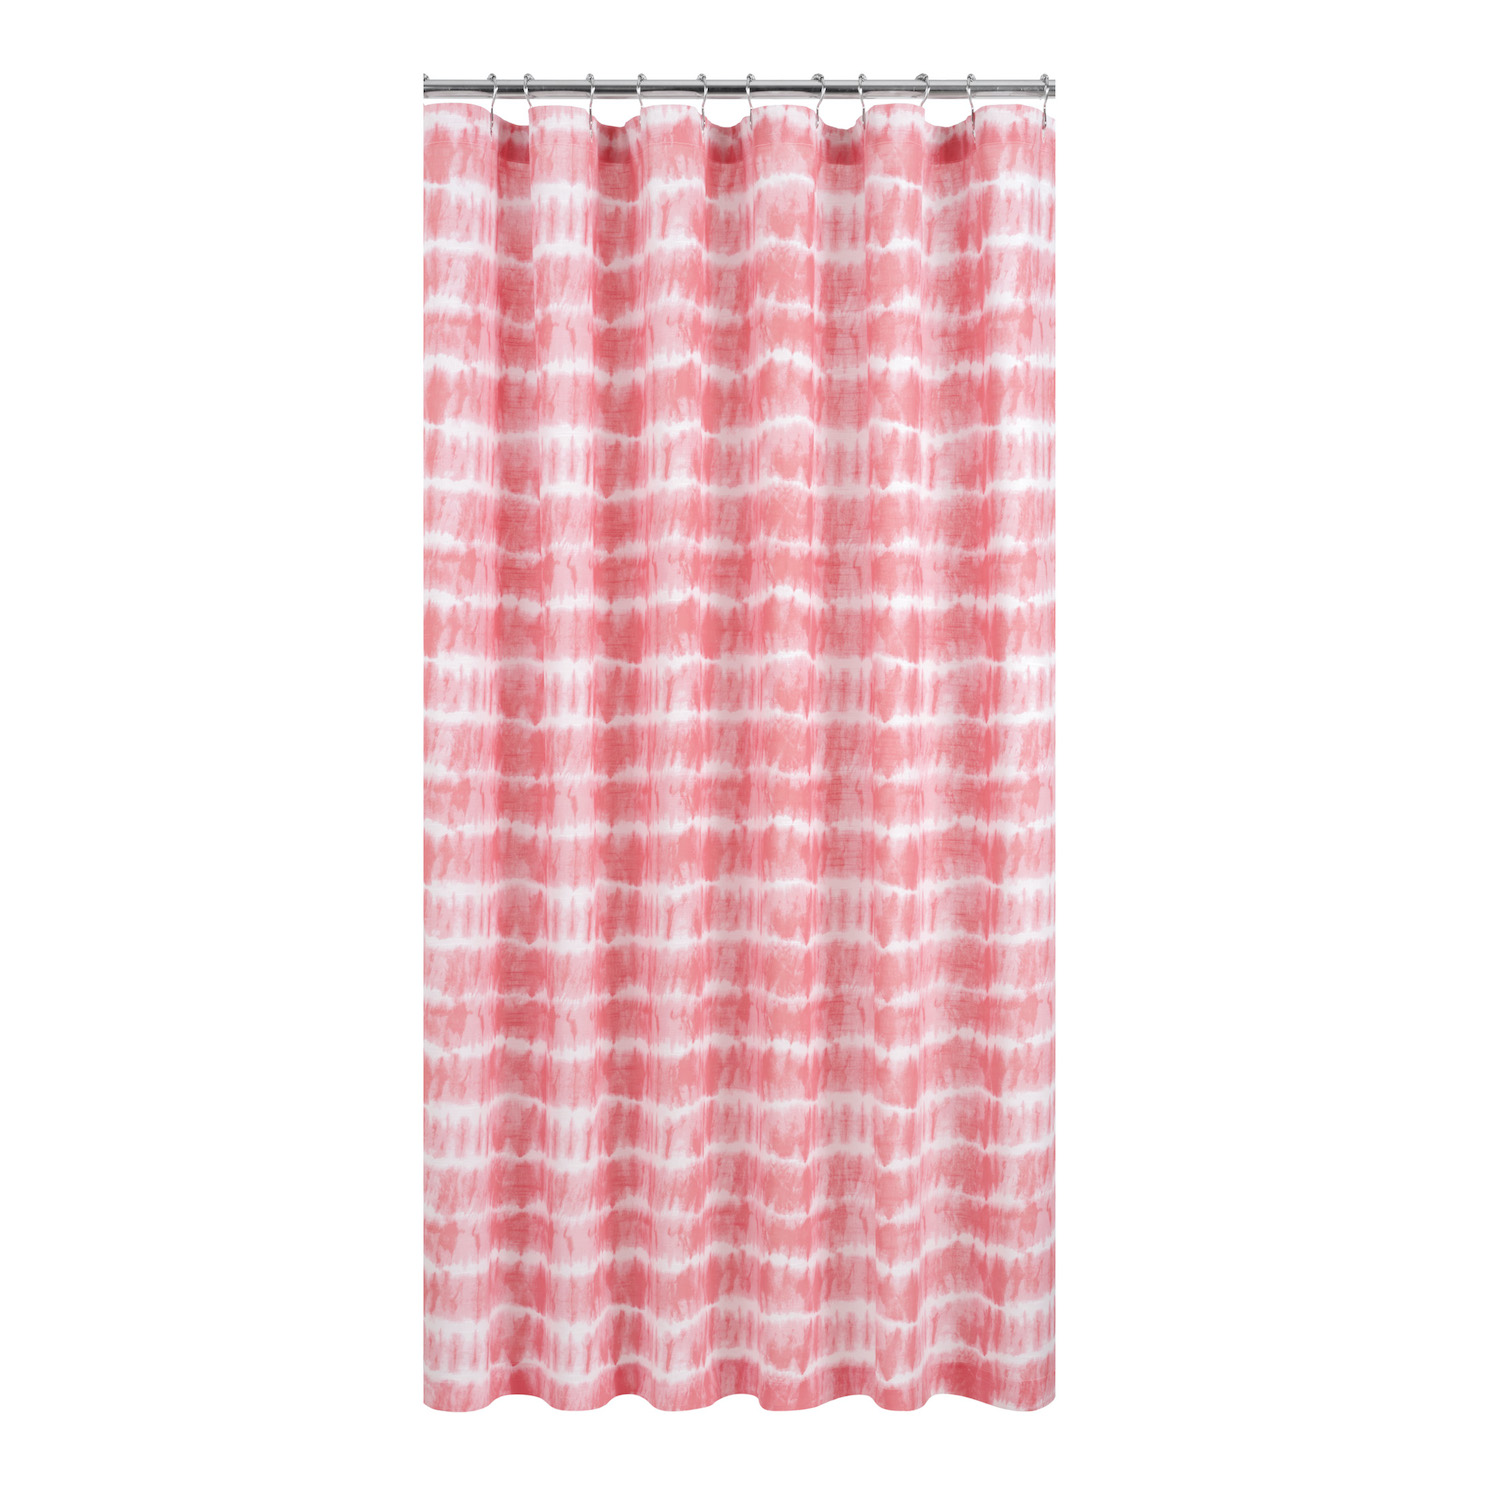 Gap Home Tie-Dye Organic Cotton Shower Curtain Coral